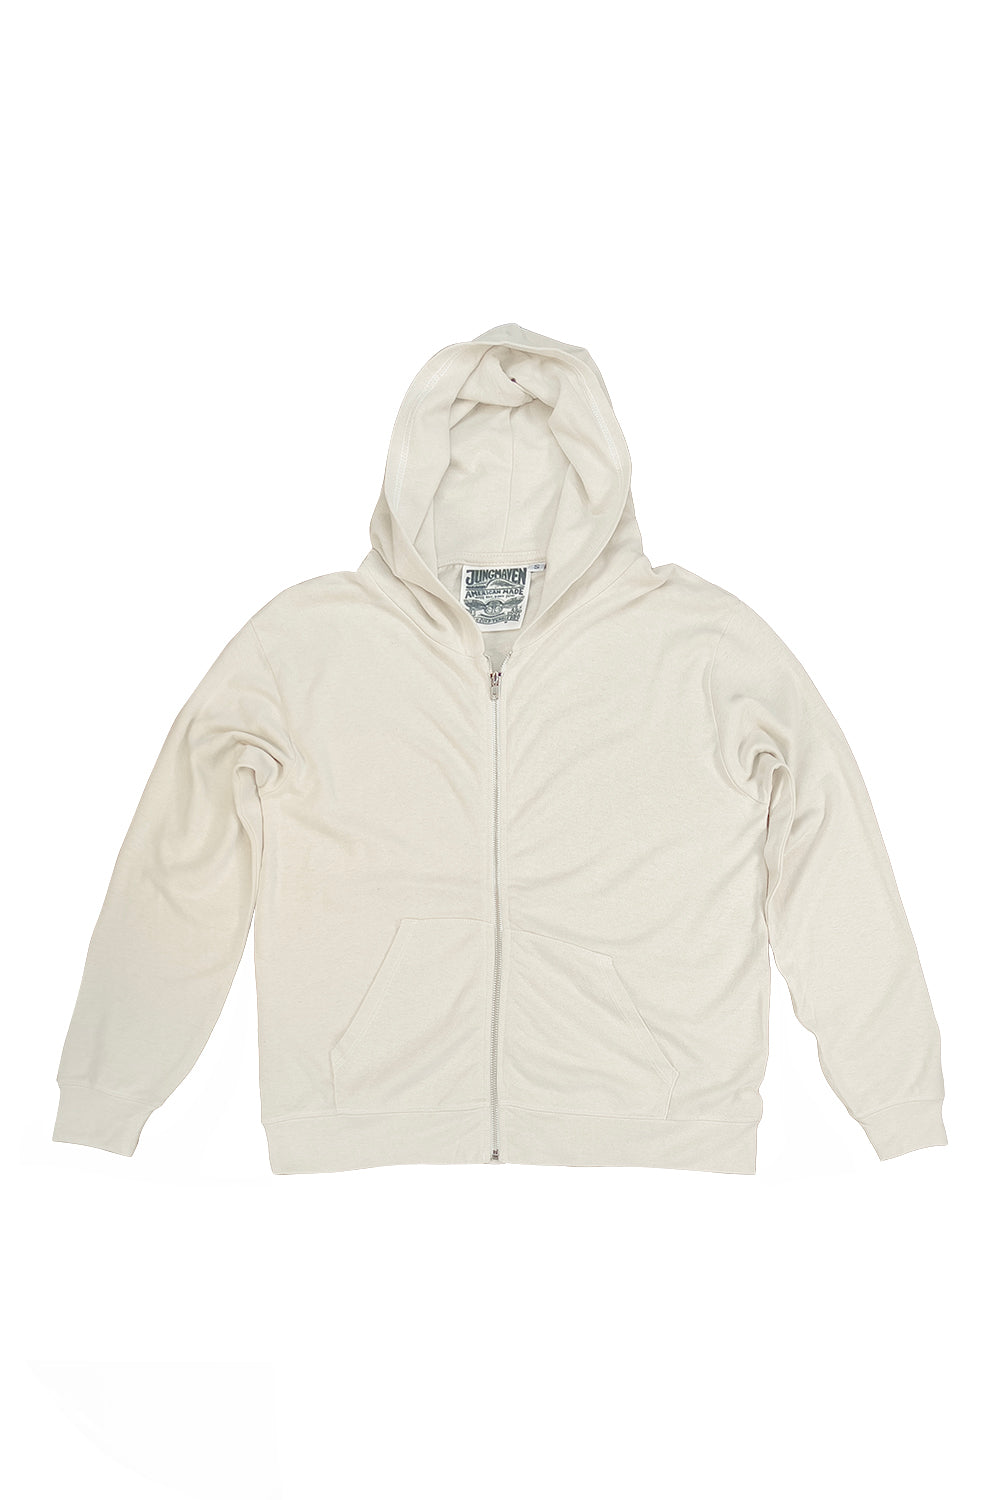 Newport Sweatshirt | Jungmaven Hemp Clothing & Accessories / Color: Washed White